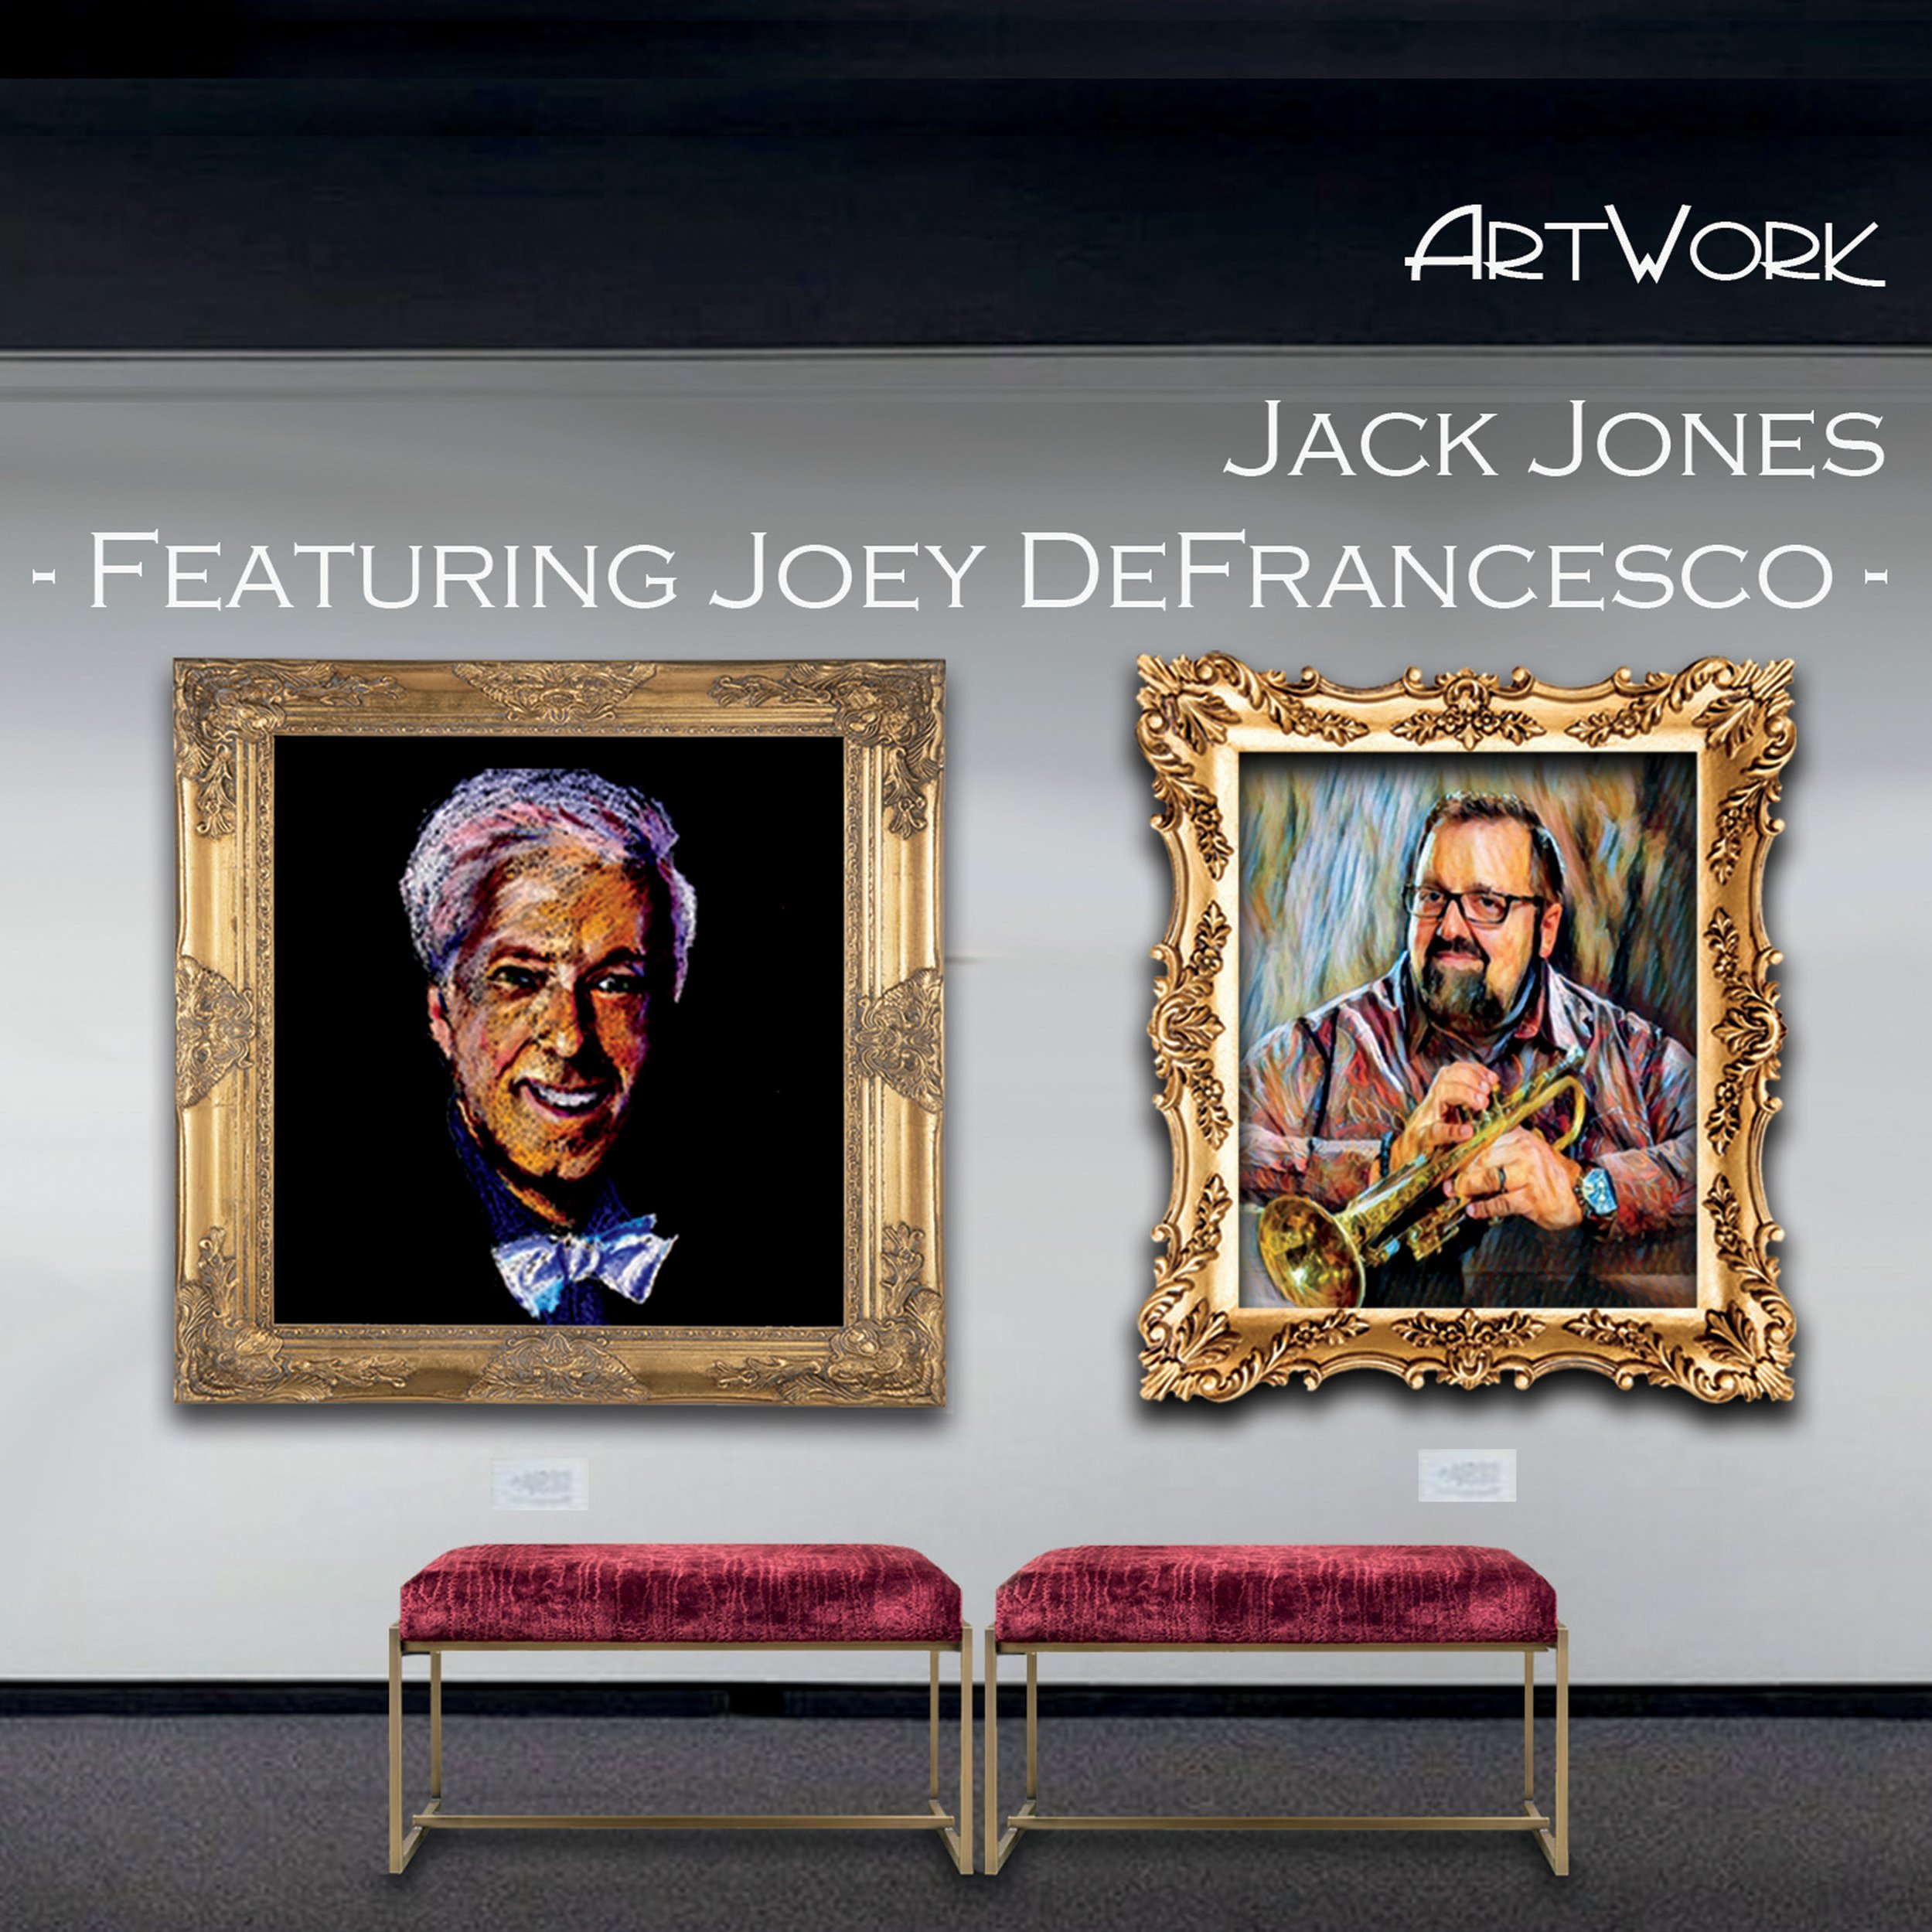 The legenfary Jack Jones feat. Joey DeFrancesco - 'ArtWork' 